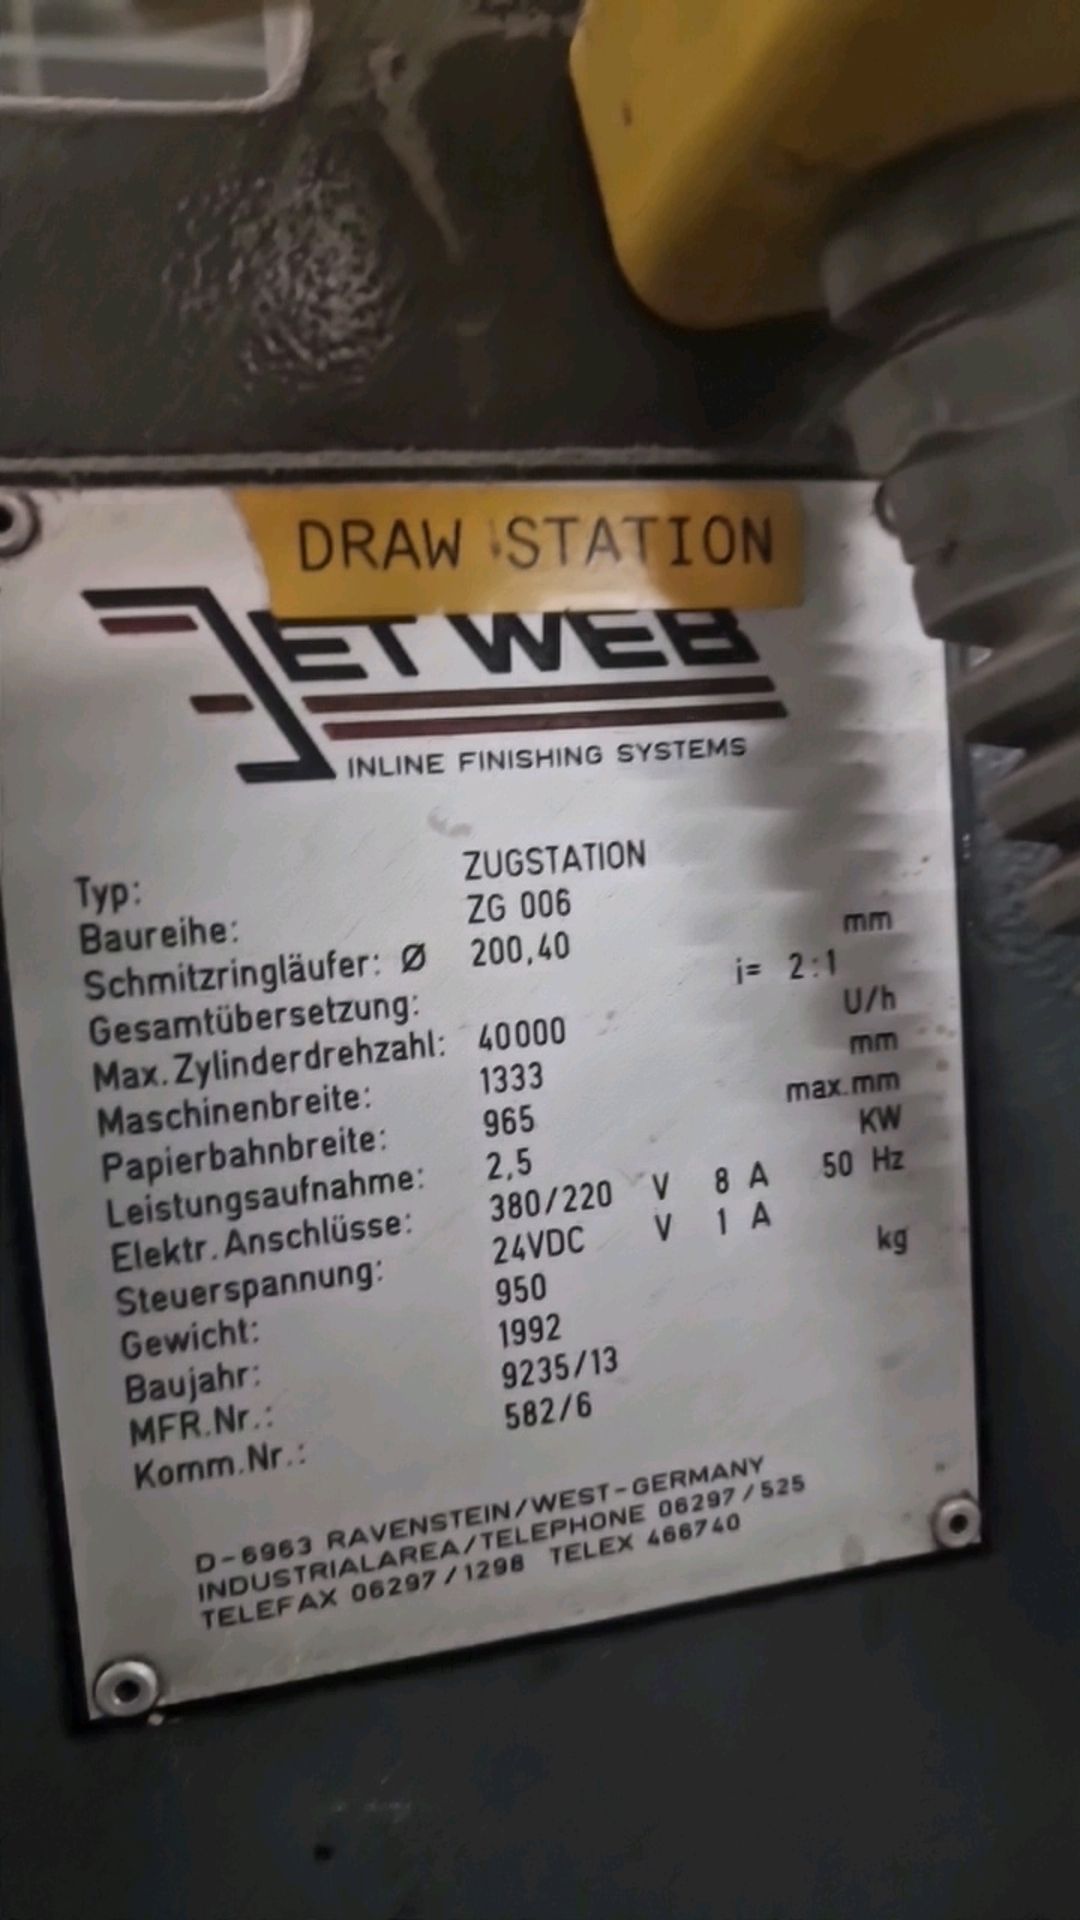 Jet Web Draw Station - Bild 3 aus 6